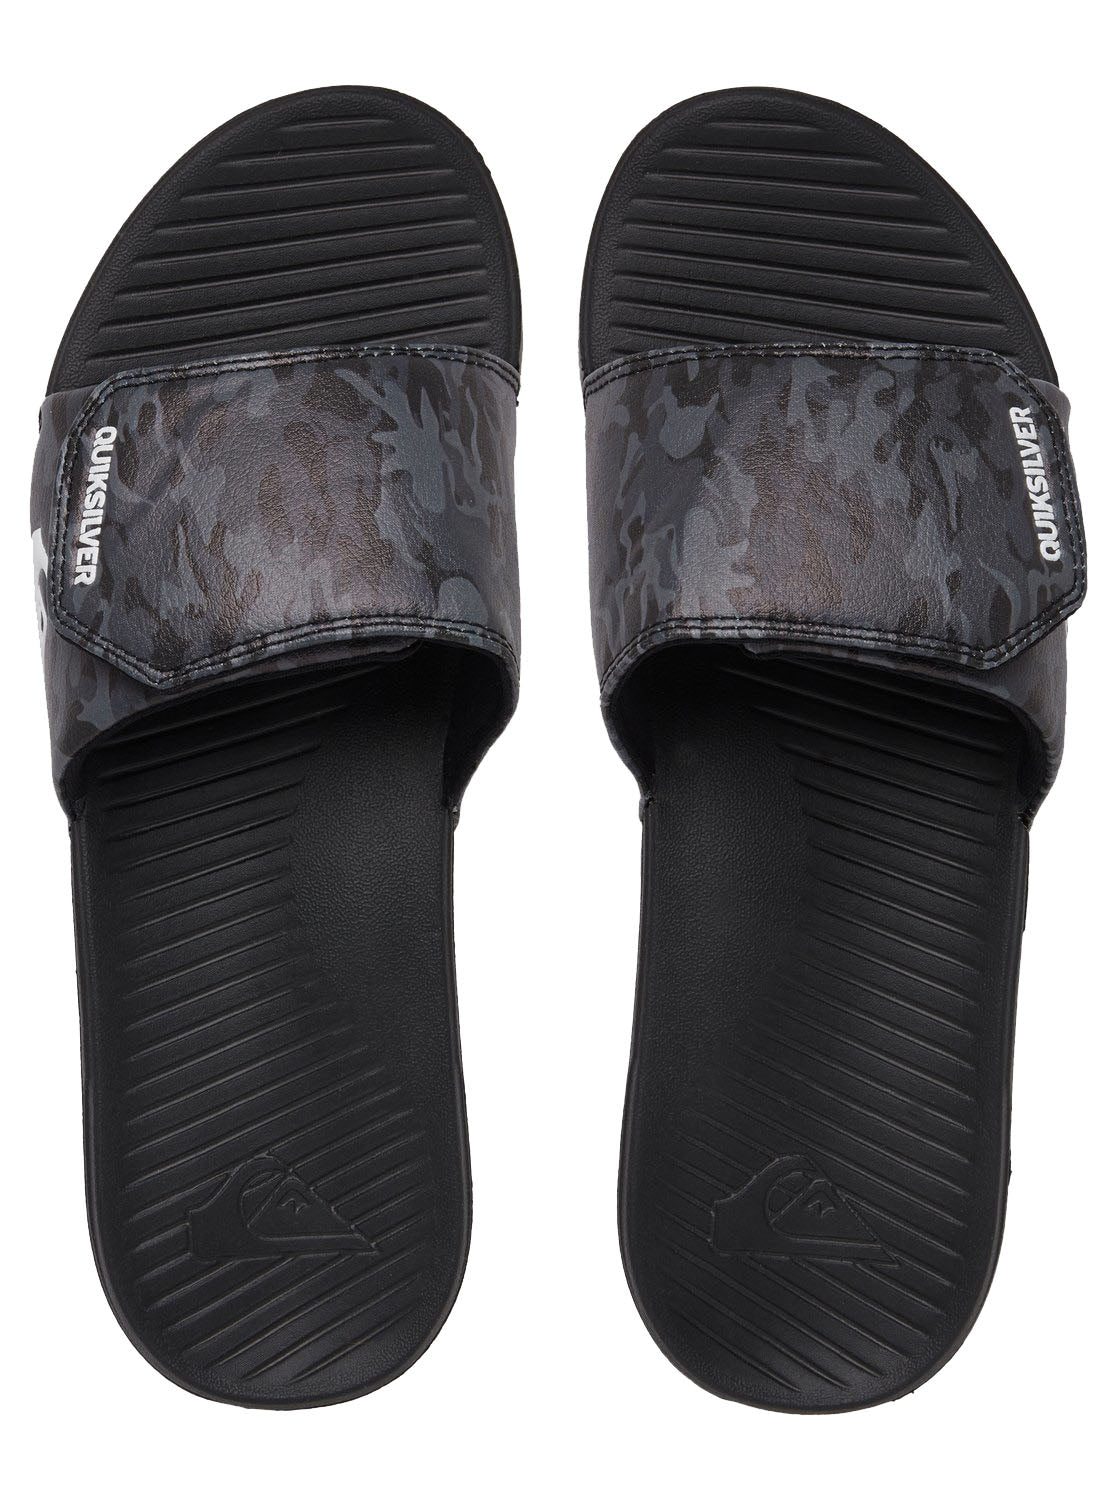 Quiksilver Bright Coast Adjust Mens Sandal XSKK-Grey-Black-Black 9